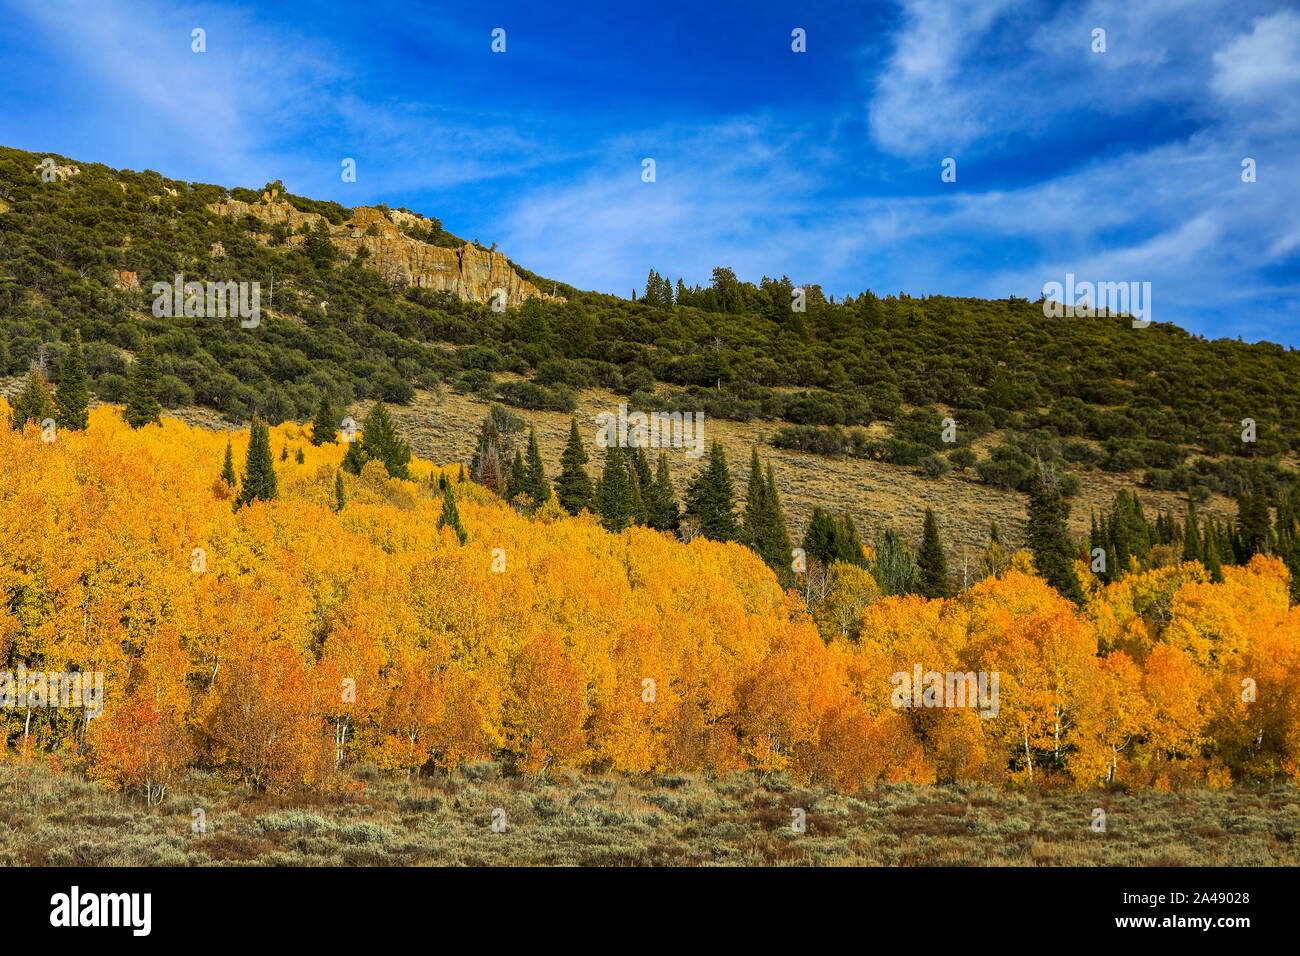 Die Farben des Herbstes auf den Bäumen entlang US Highway 89, der Logan Canyon Scenic Byway in Logan Canyon, Uinta-Wasatch-Cache National Forest, Utah, USA. Stockfoto